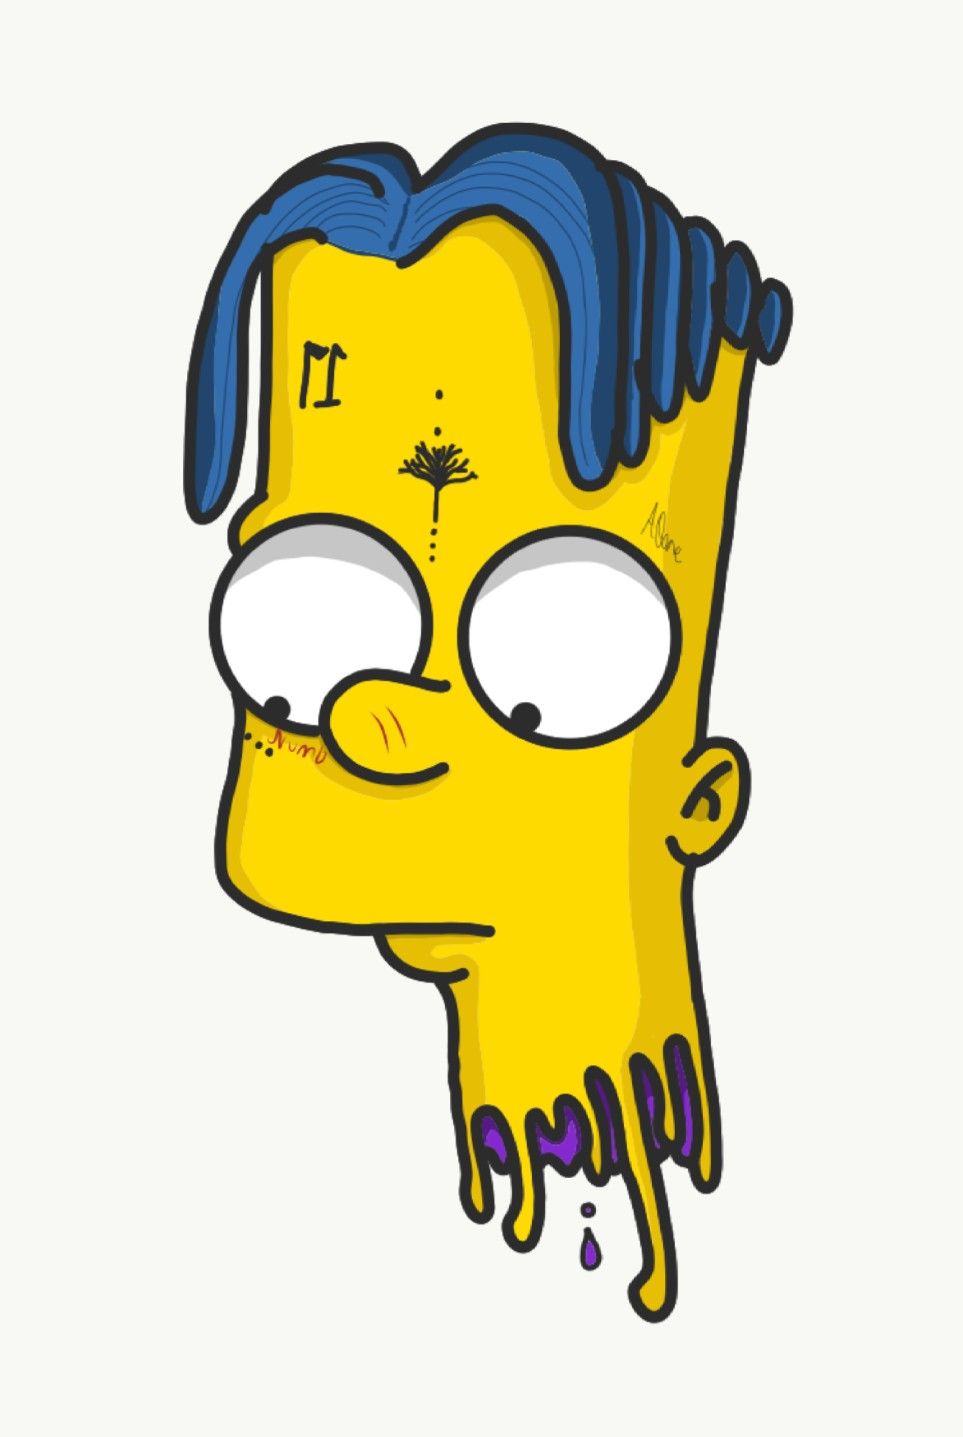 22+] Bart XXXTentacion Wallpapers